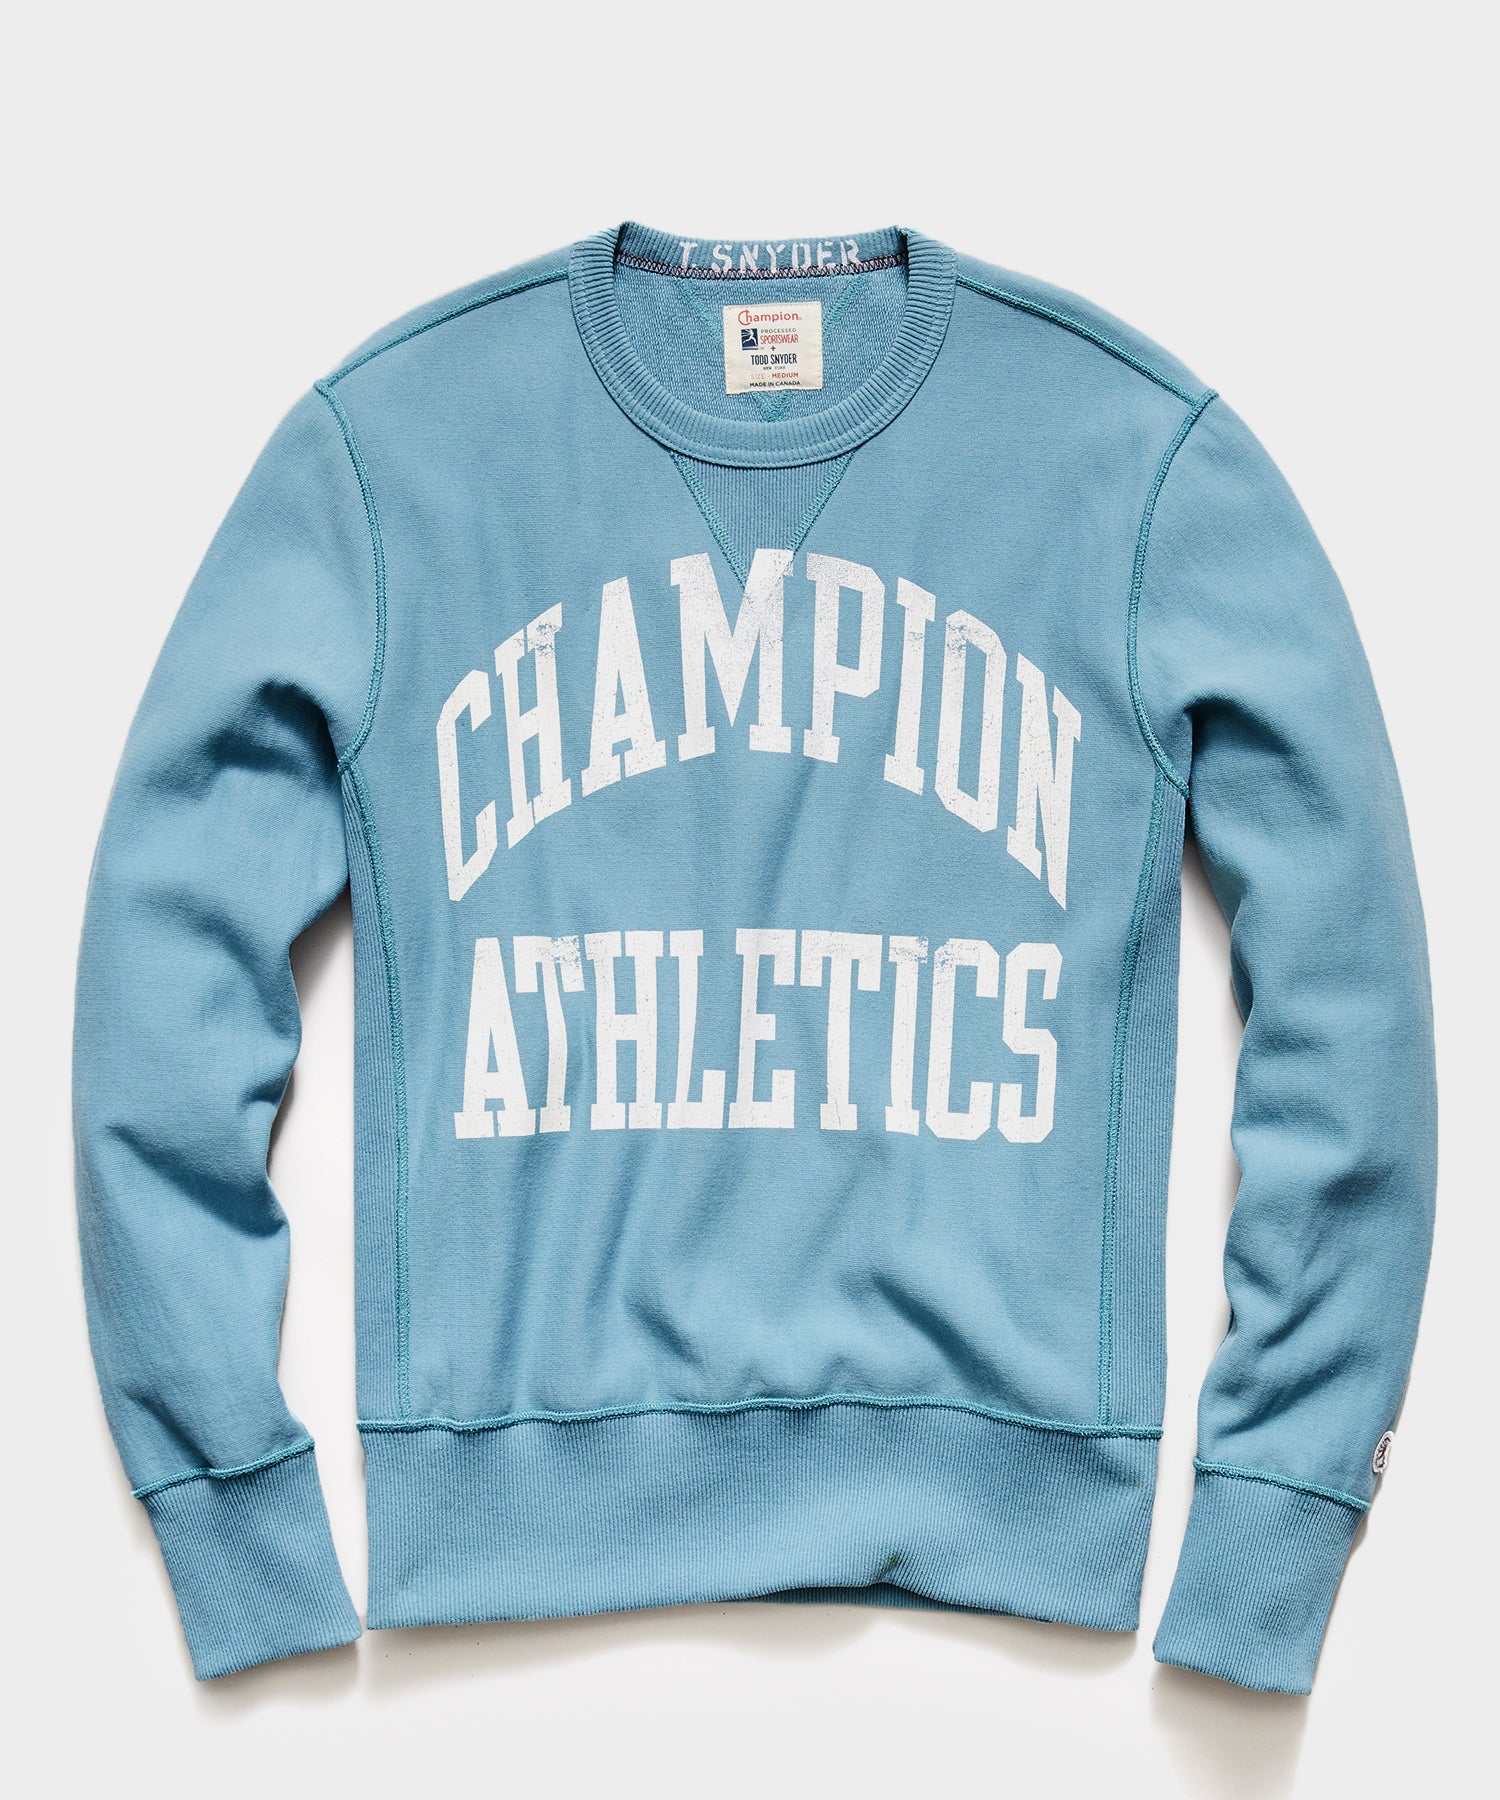 Champion Athletics Sweatshirt in 